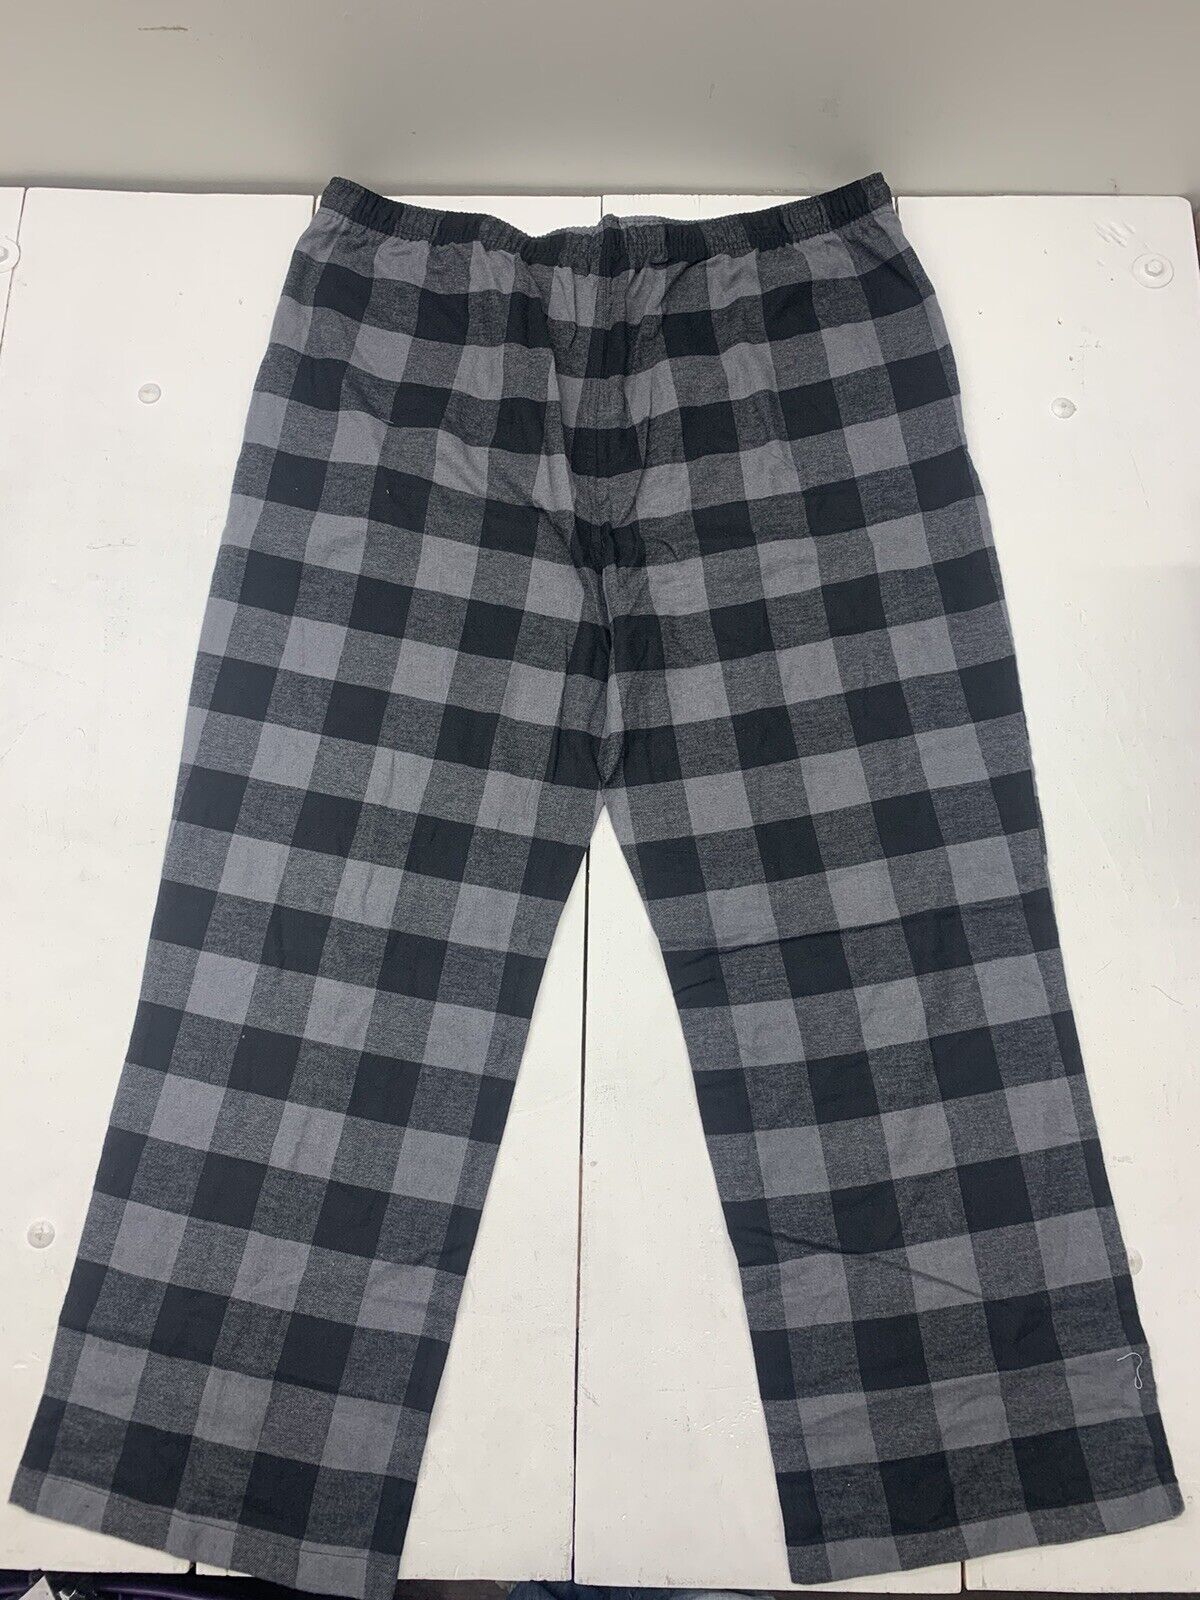 Sonoma Mens Black Plaid Pajama Pants Size 3XLT - beyond exchange